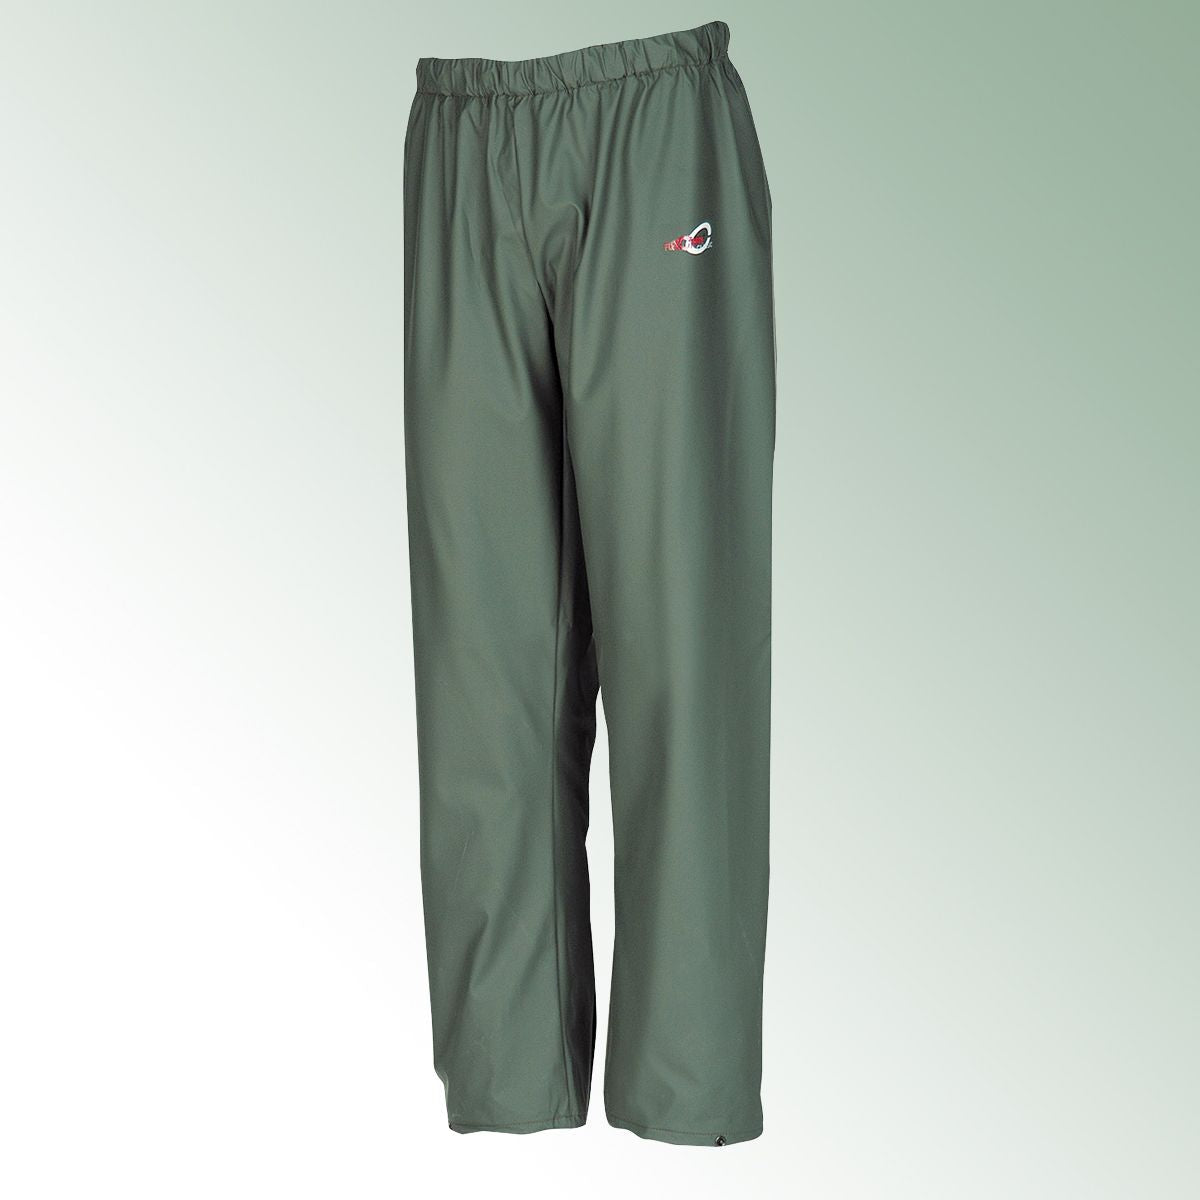 Rain trousers Flexothane size M - olive green model 4500